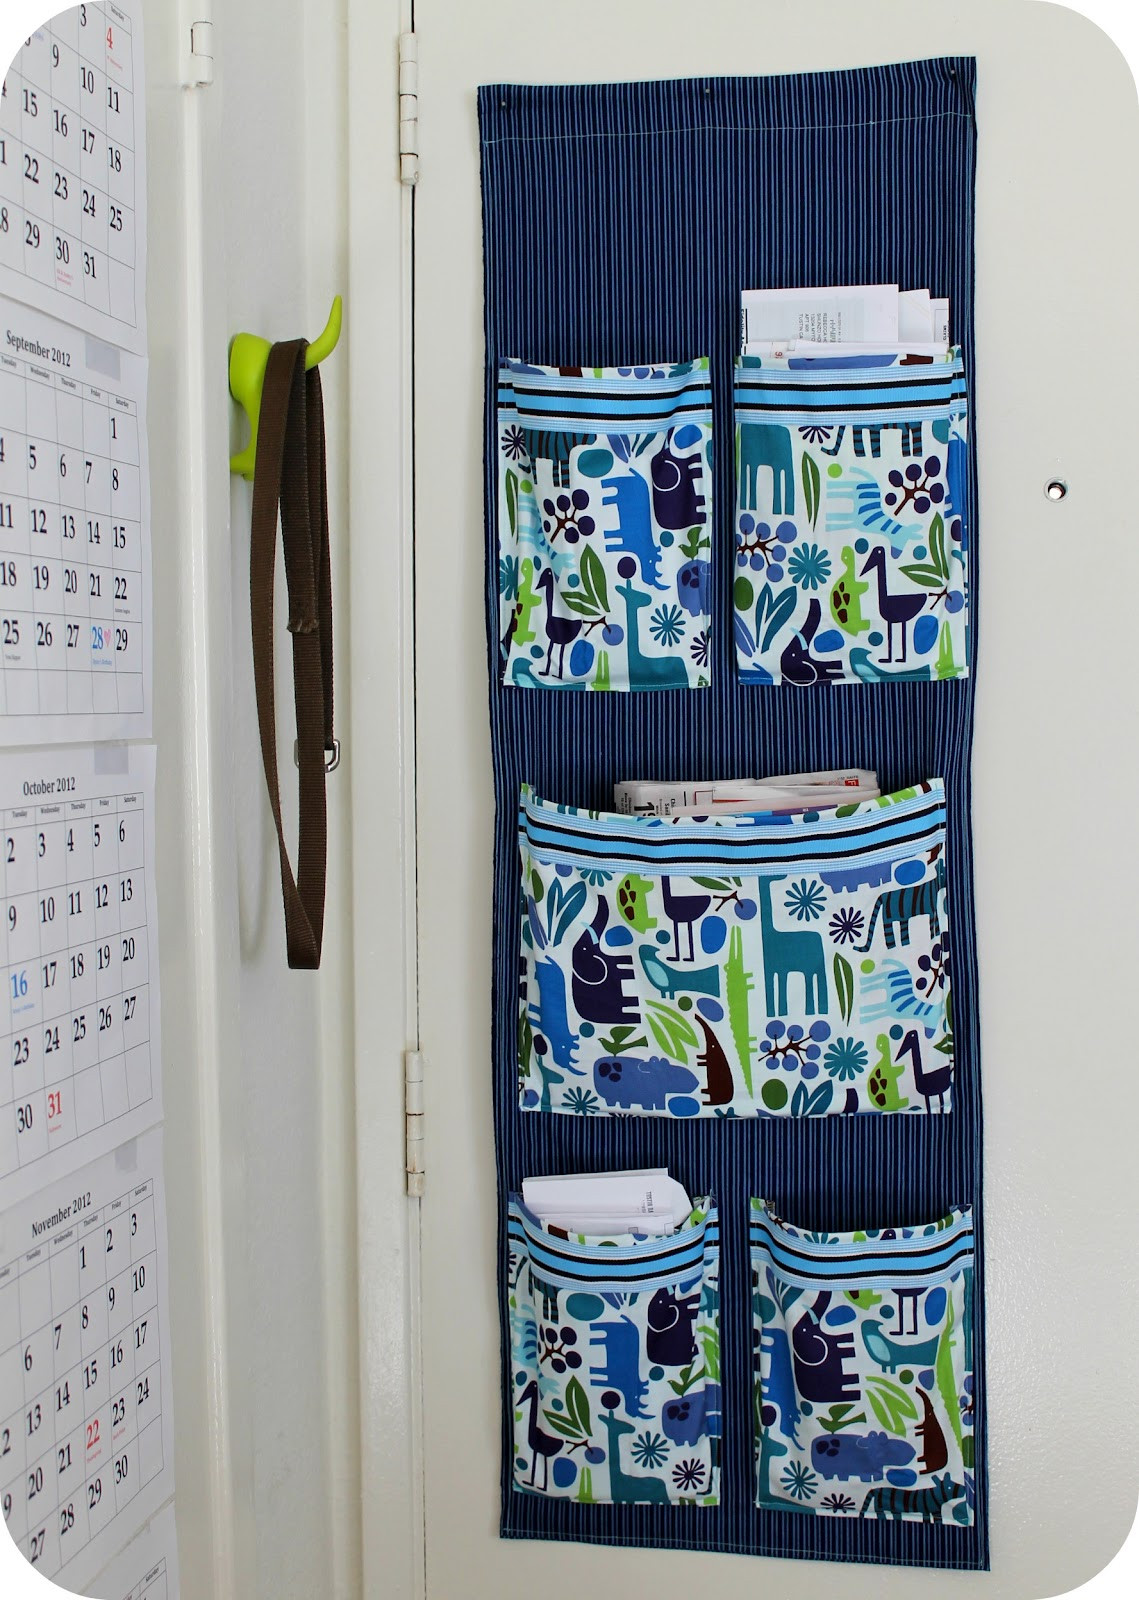 DIY Wall Pocket Organizer
 DiY Project Sew a Fabric Mail Organizer for the Wall